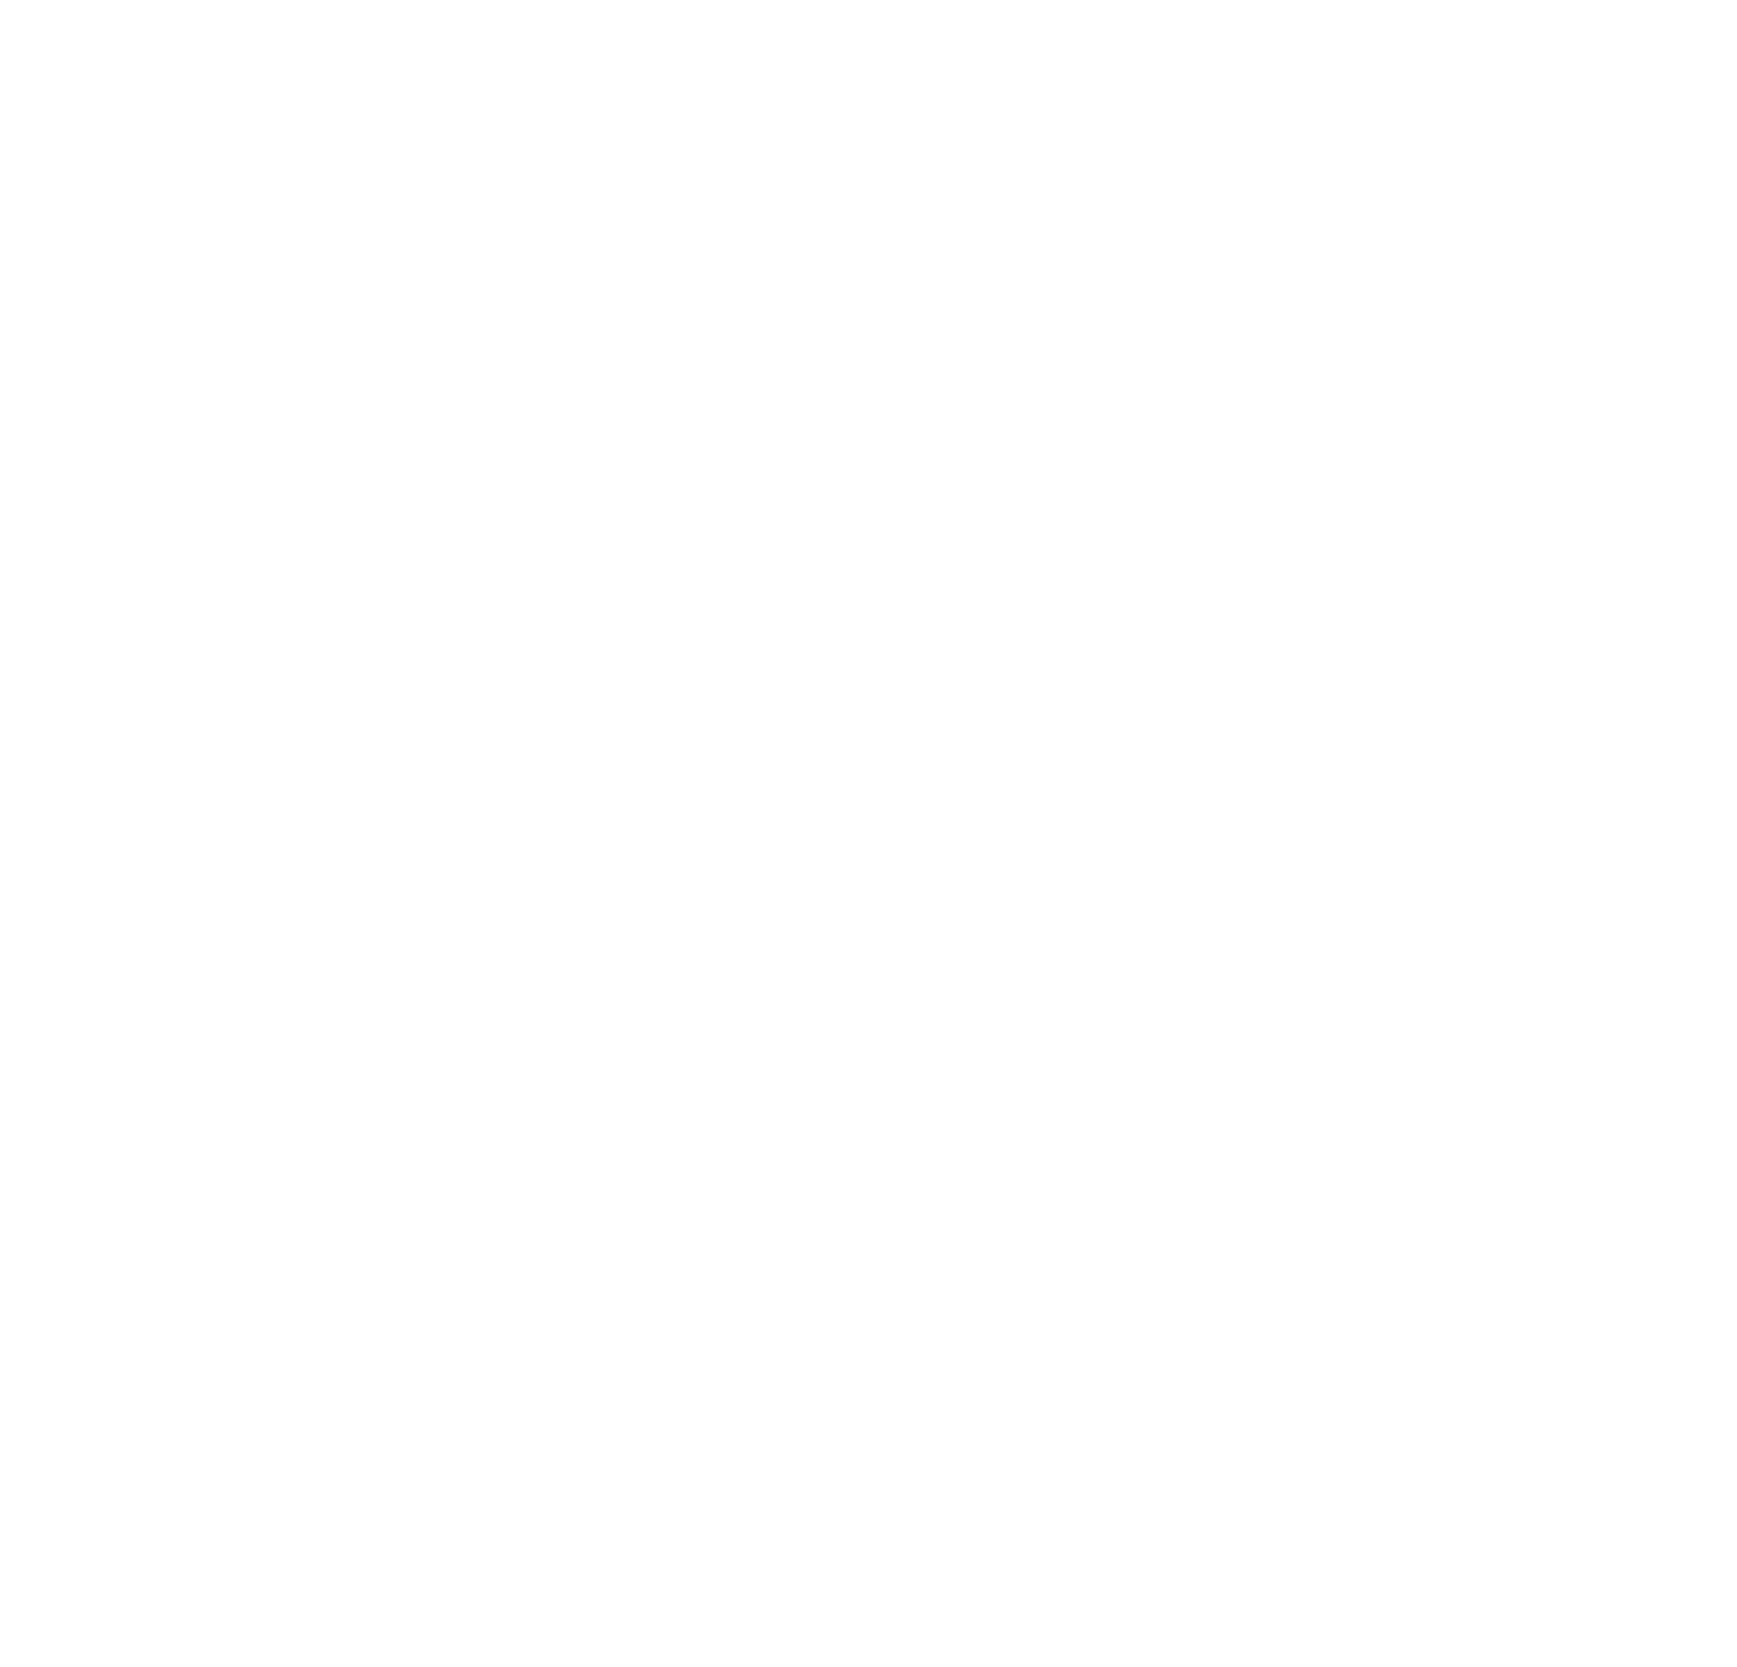 Carbon Intensity